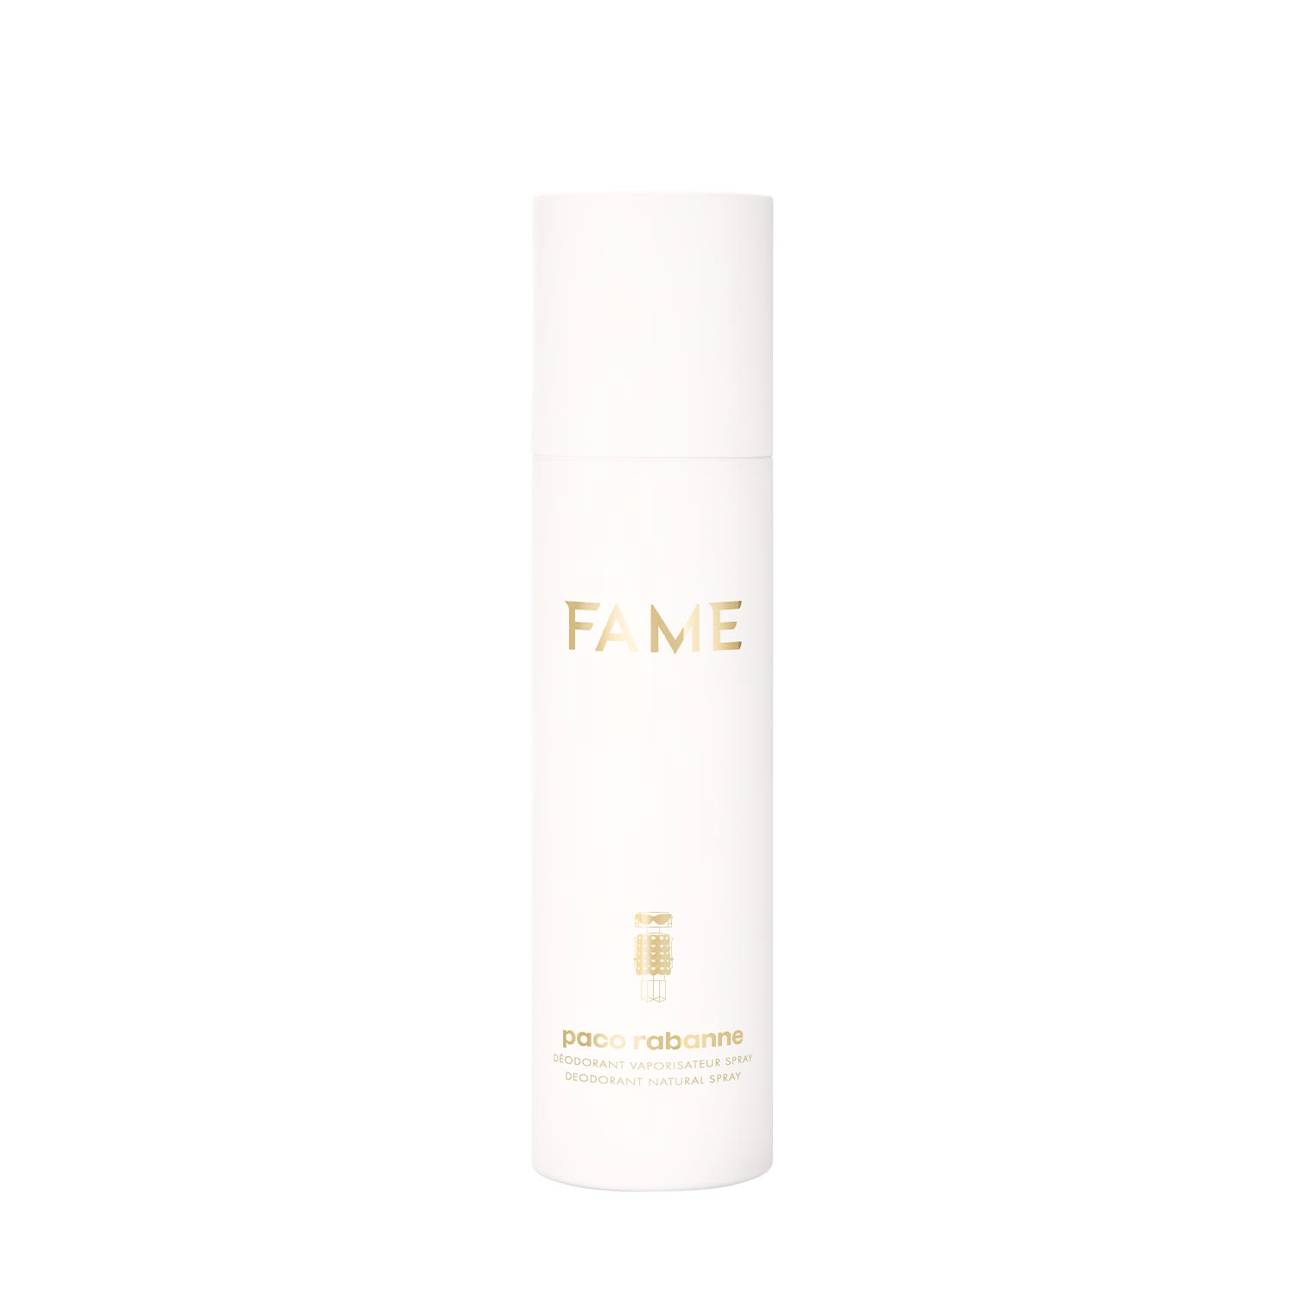 Fame Deodorant Spray 150 ml bestvalue.eu